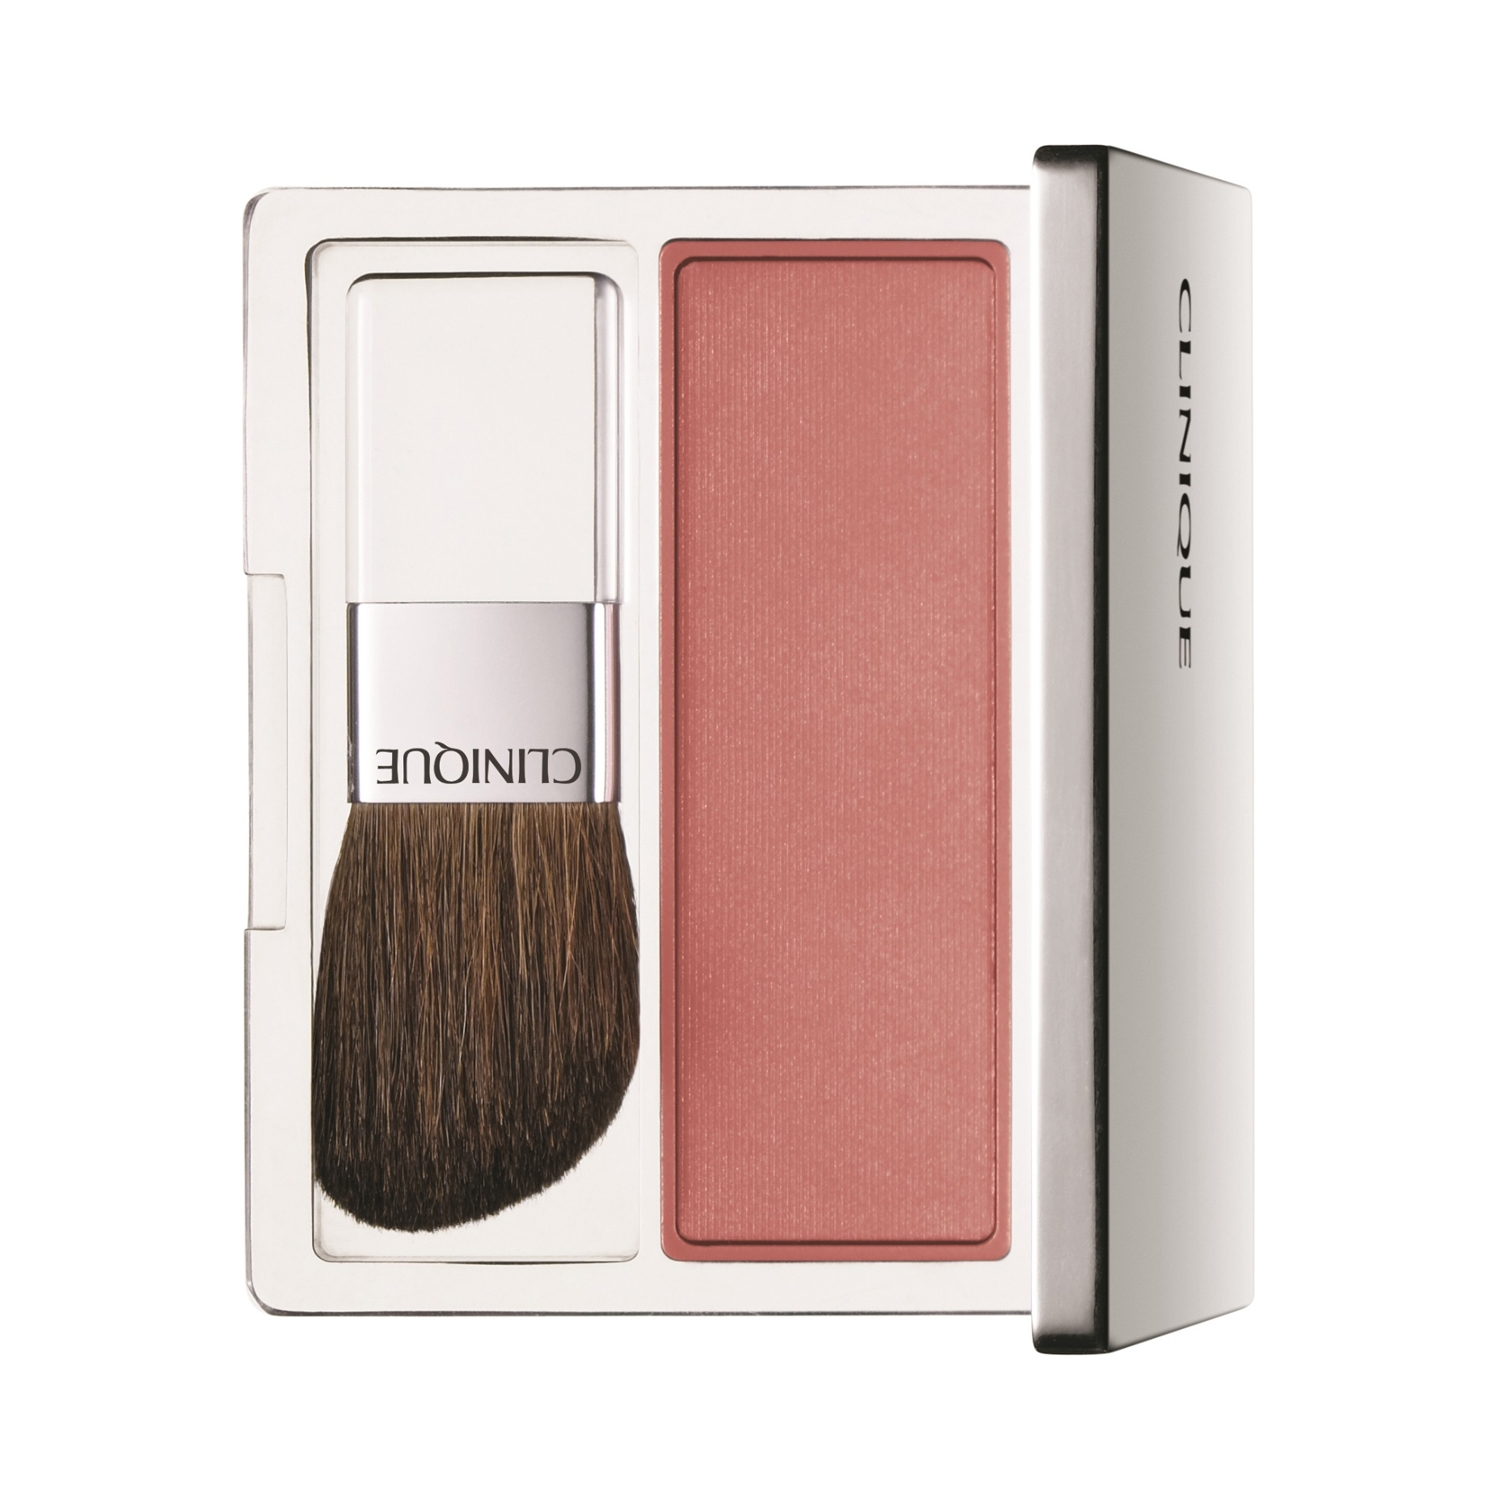 CLINIQUE | CLINIQUE Blushing Blush Powder Blush - Sunset Glow (6g)